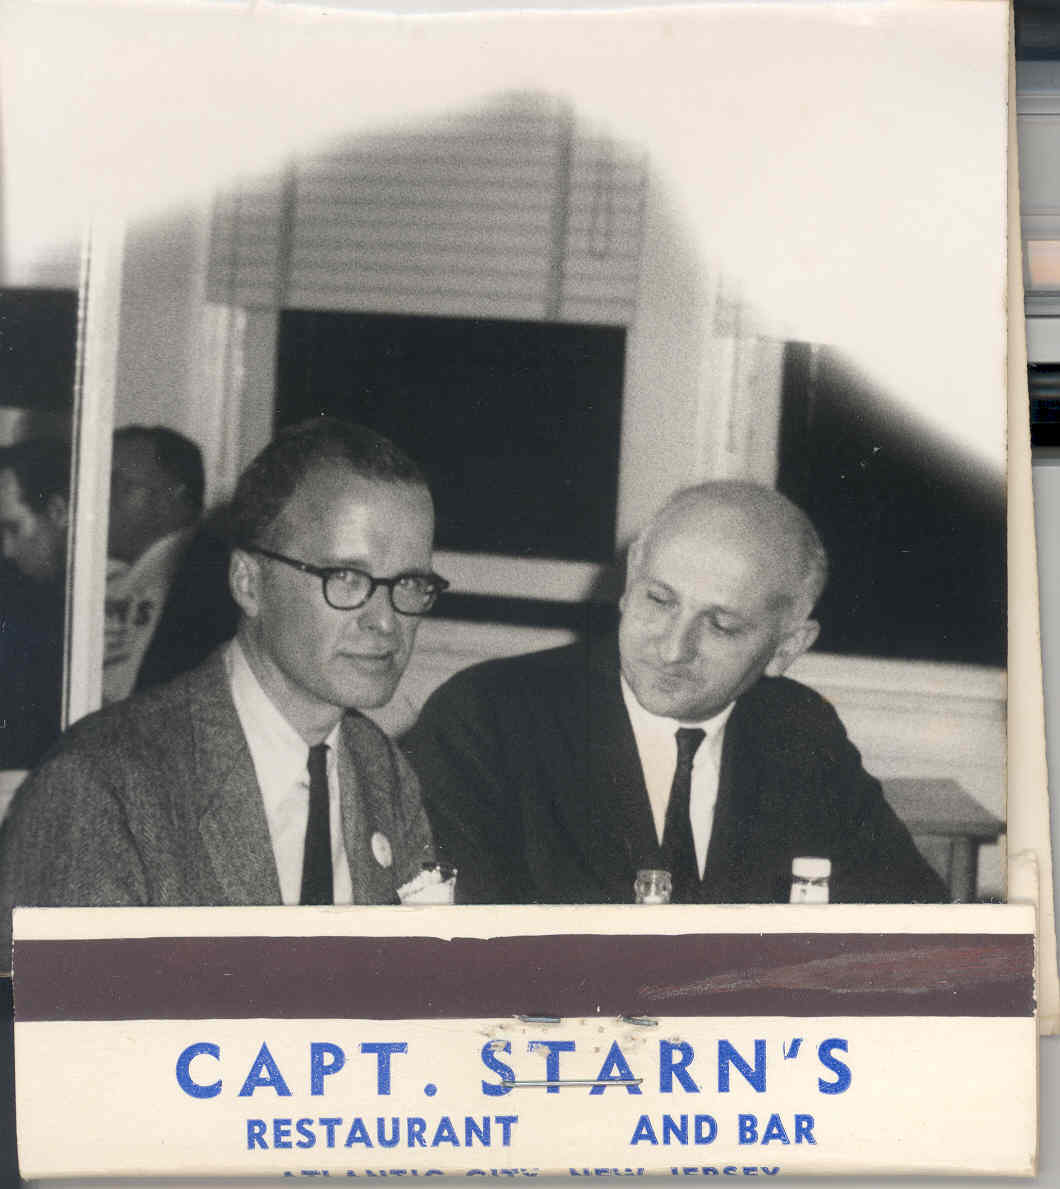 John Backus and John Cocke at Capt. Starn's Restaurant and Bar, Atlantic City, New Jersey